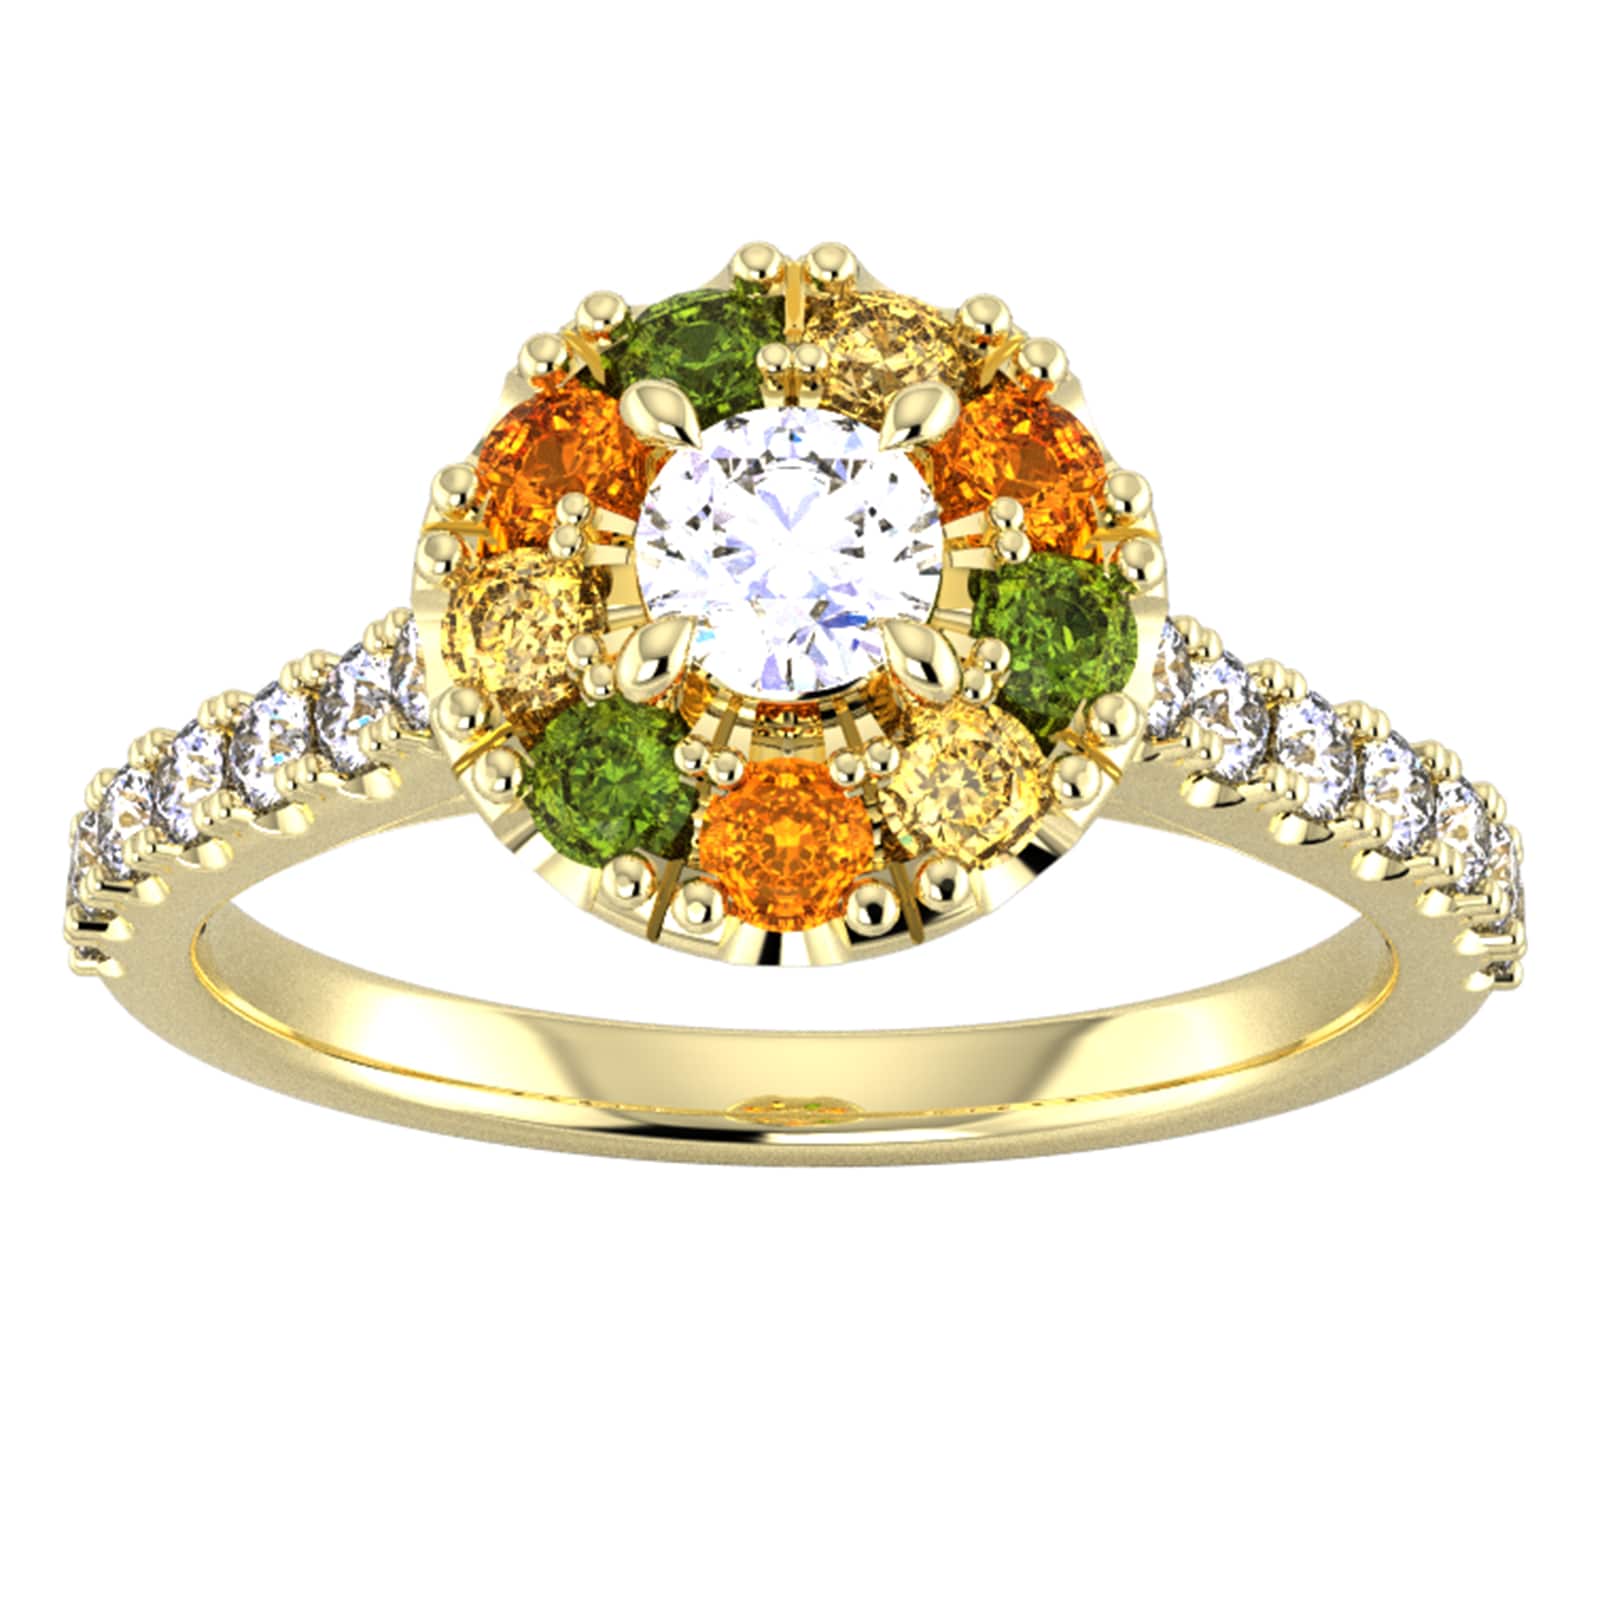 18ct Yellow Gold Diamond & Yellow, Orange, Green Sapphire Halo Ring - Ring Size M.5